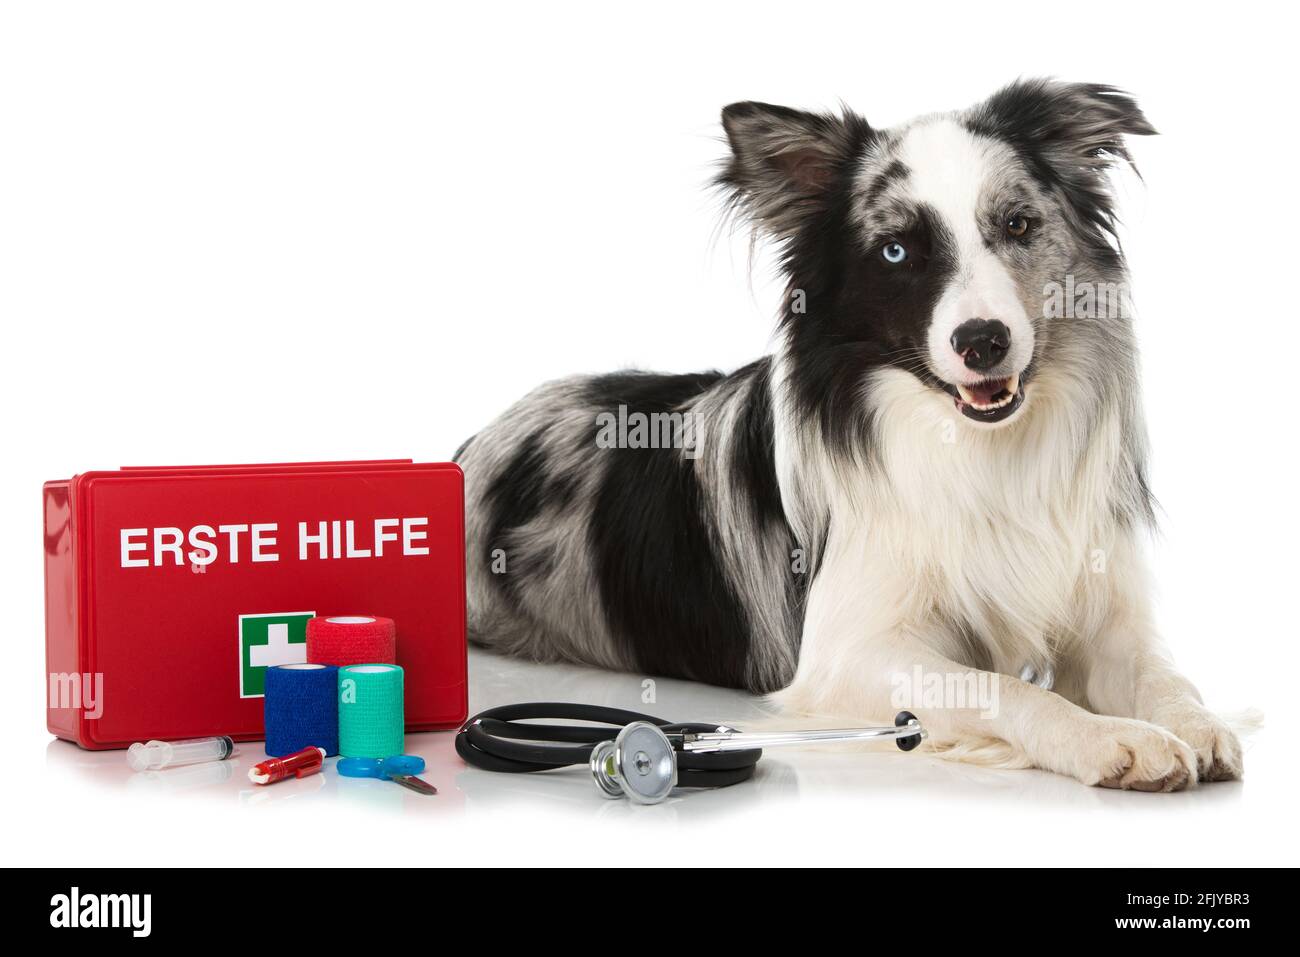 Hund mit Verbandskasten Stockfotografie - Alamy